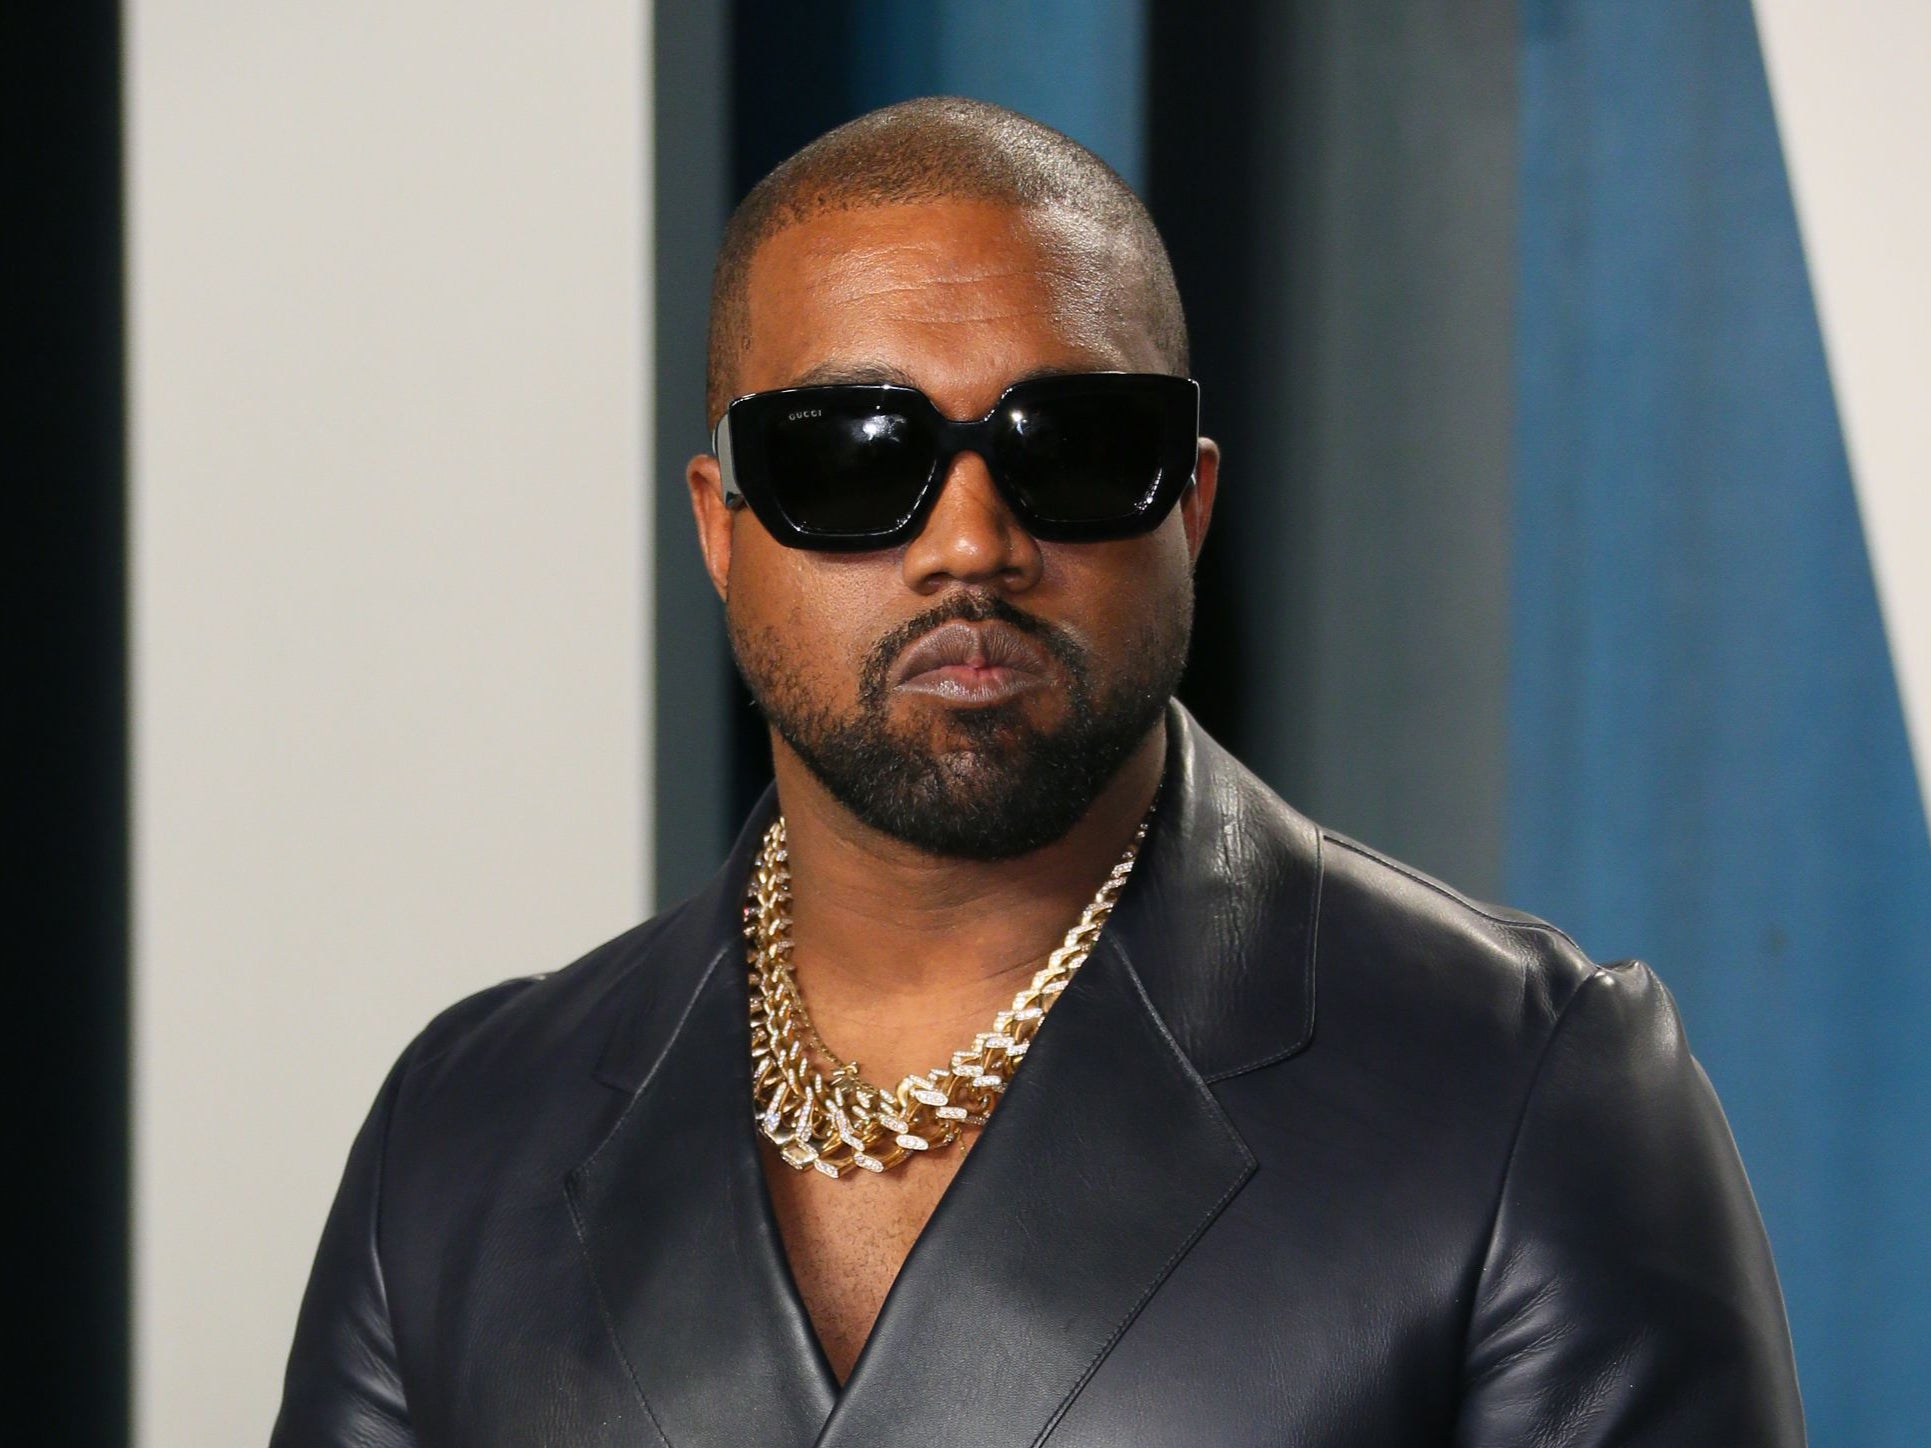 Critics found little of merit on Kanye’s new album ‘Vultures’